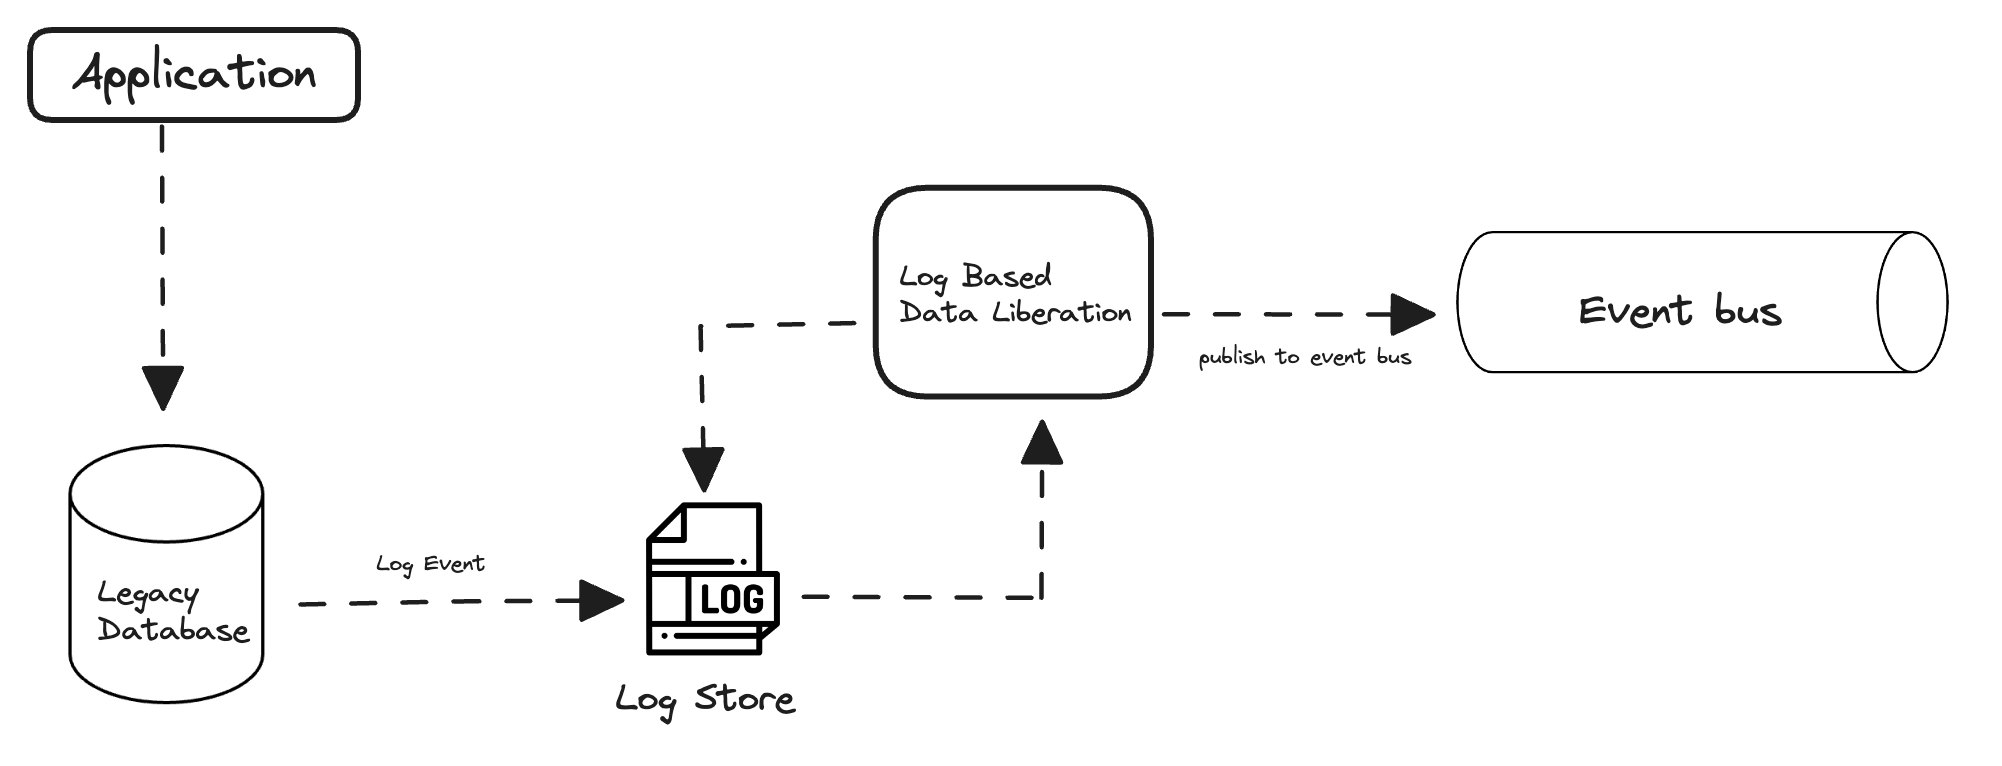 Log Based Data Liberation